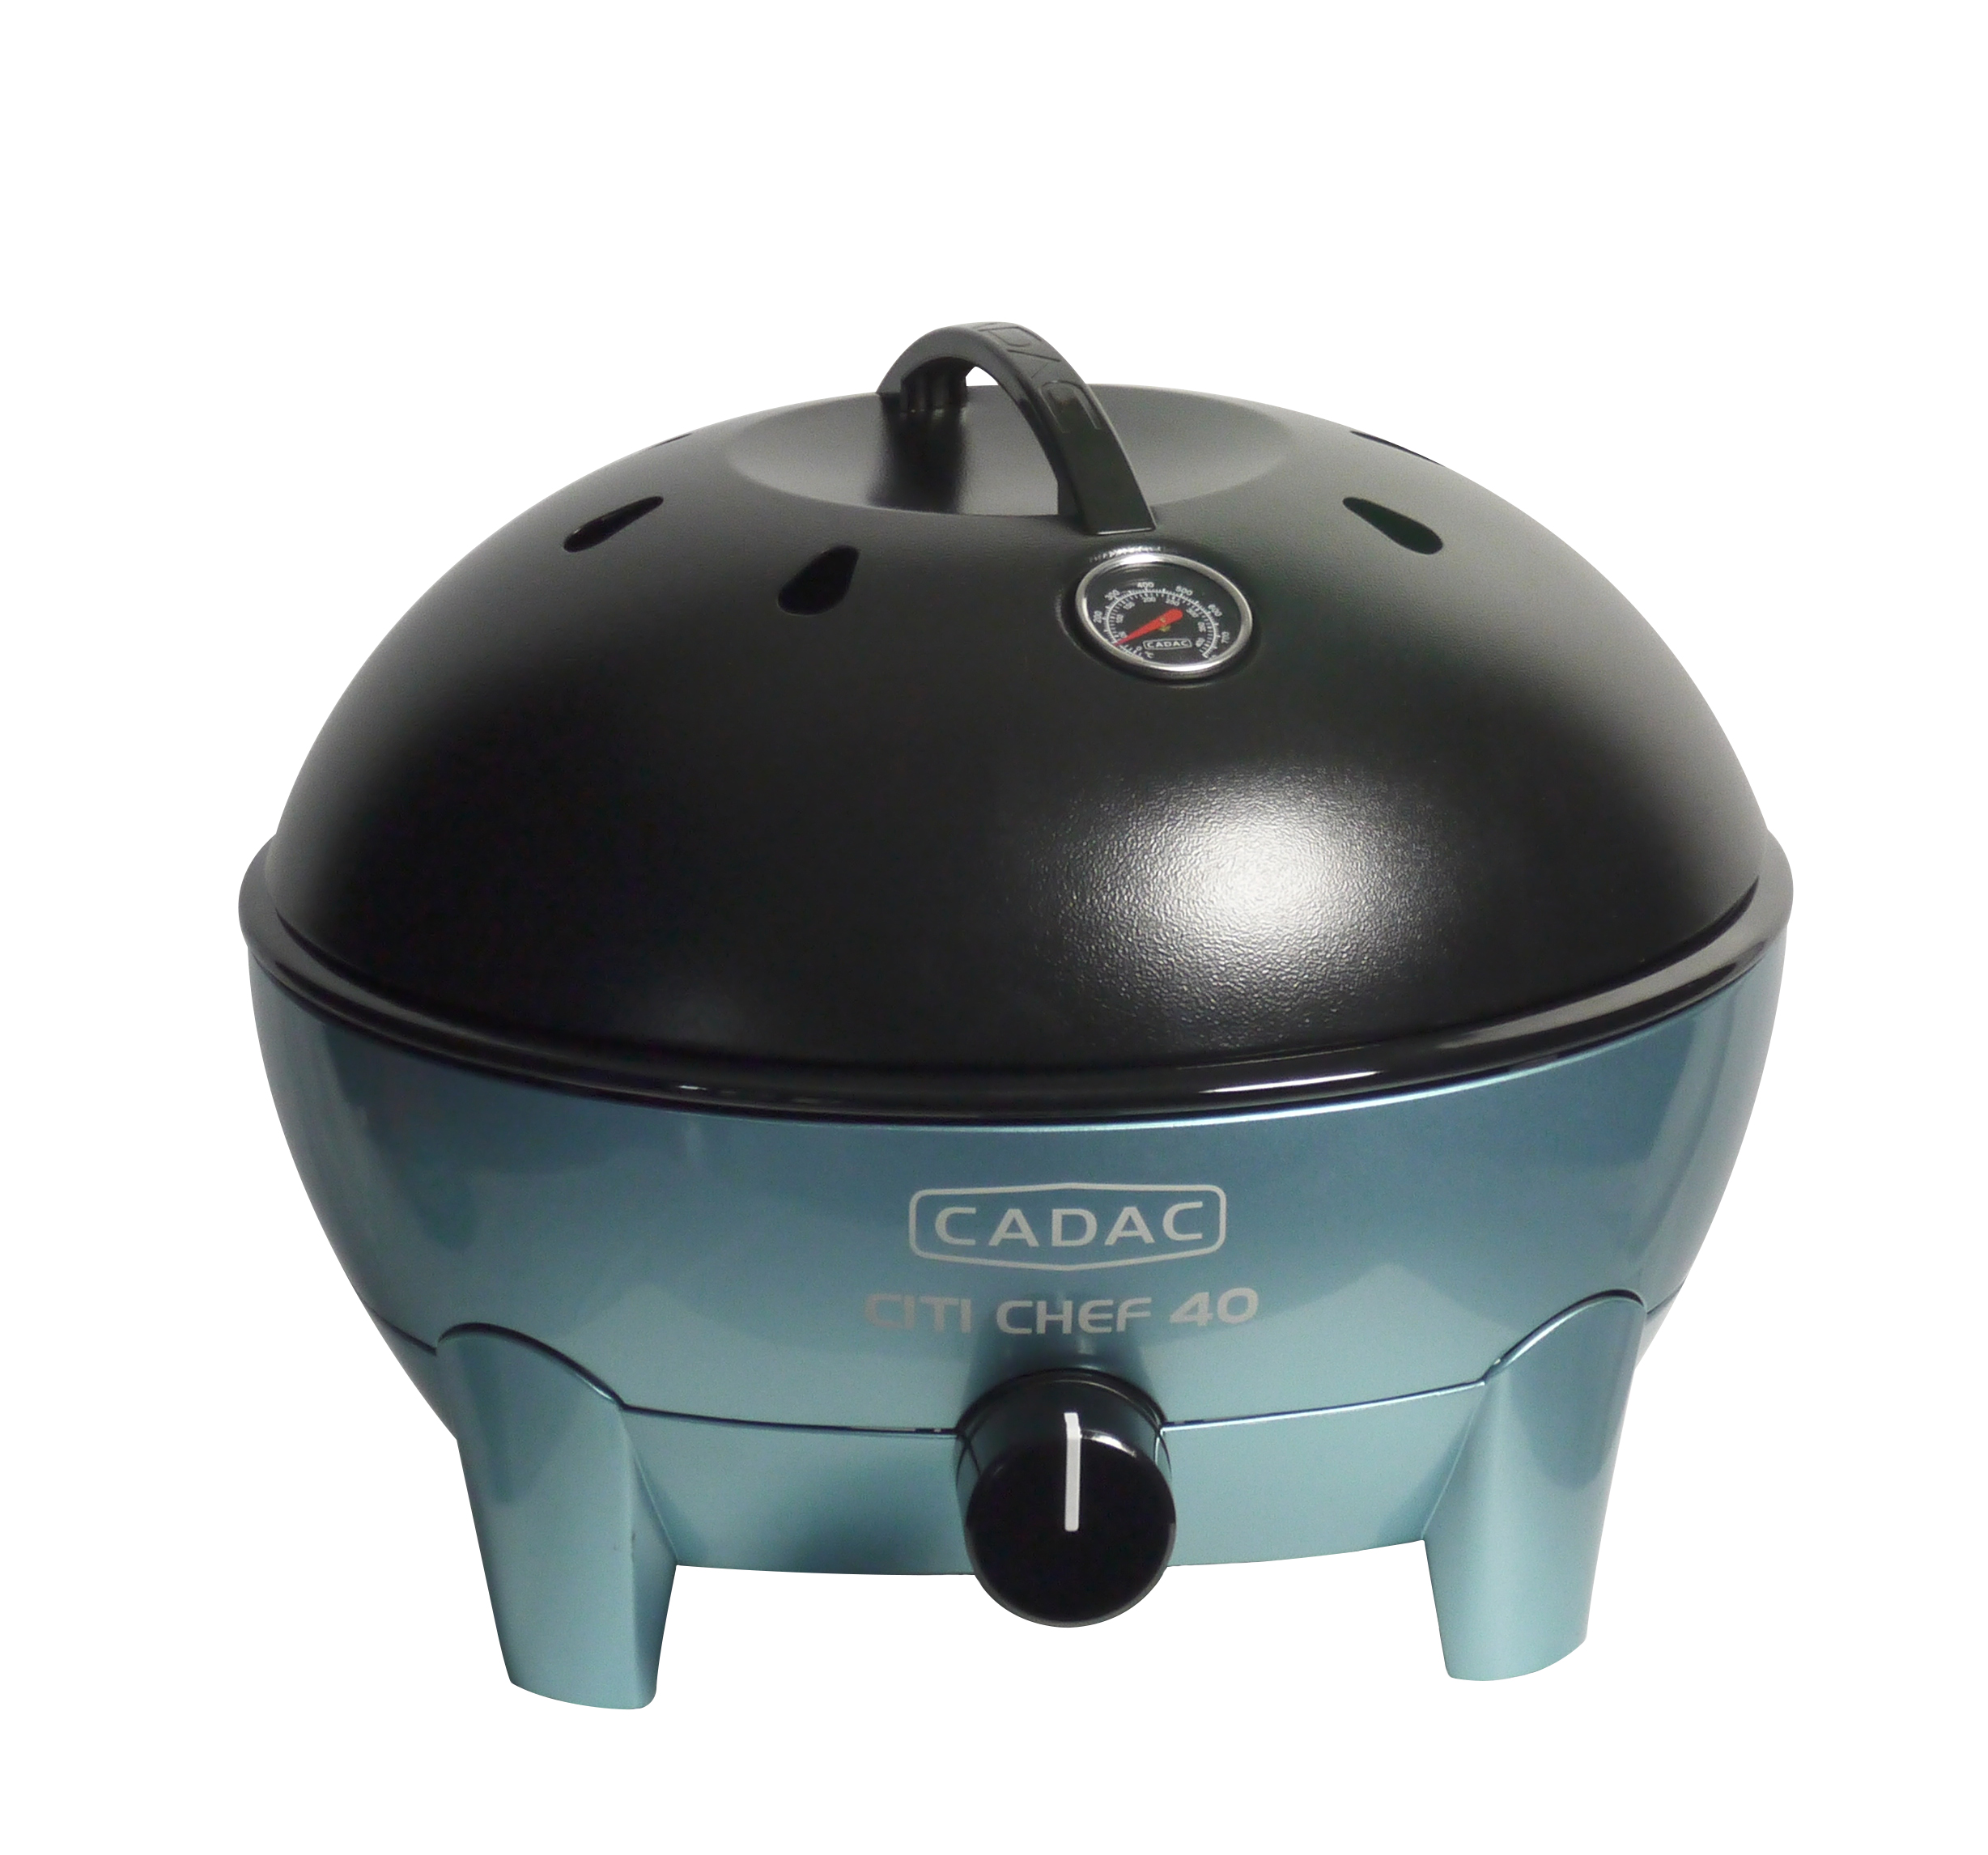 Cadac Citi Chef 40 Portable Gas BBQ (Sky Blue)